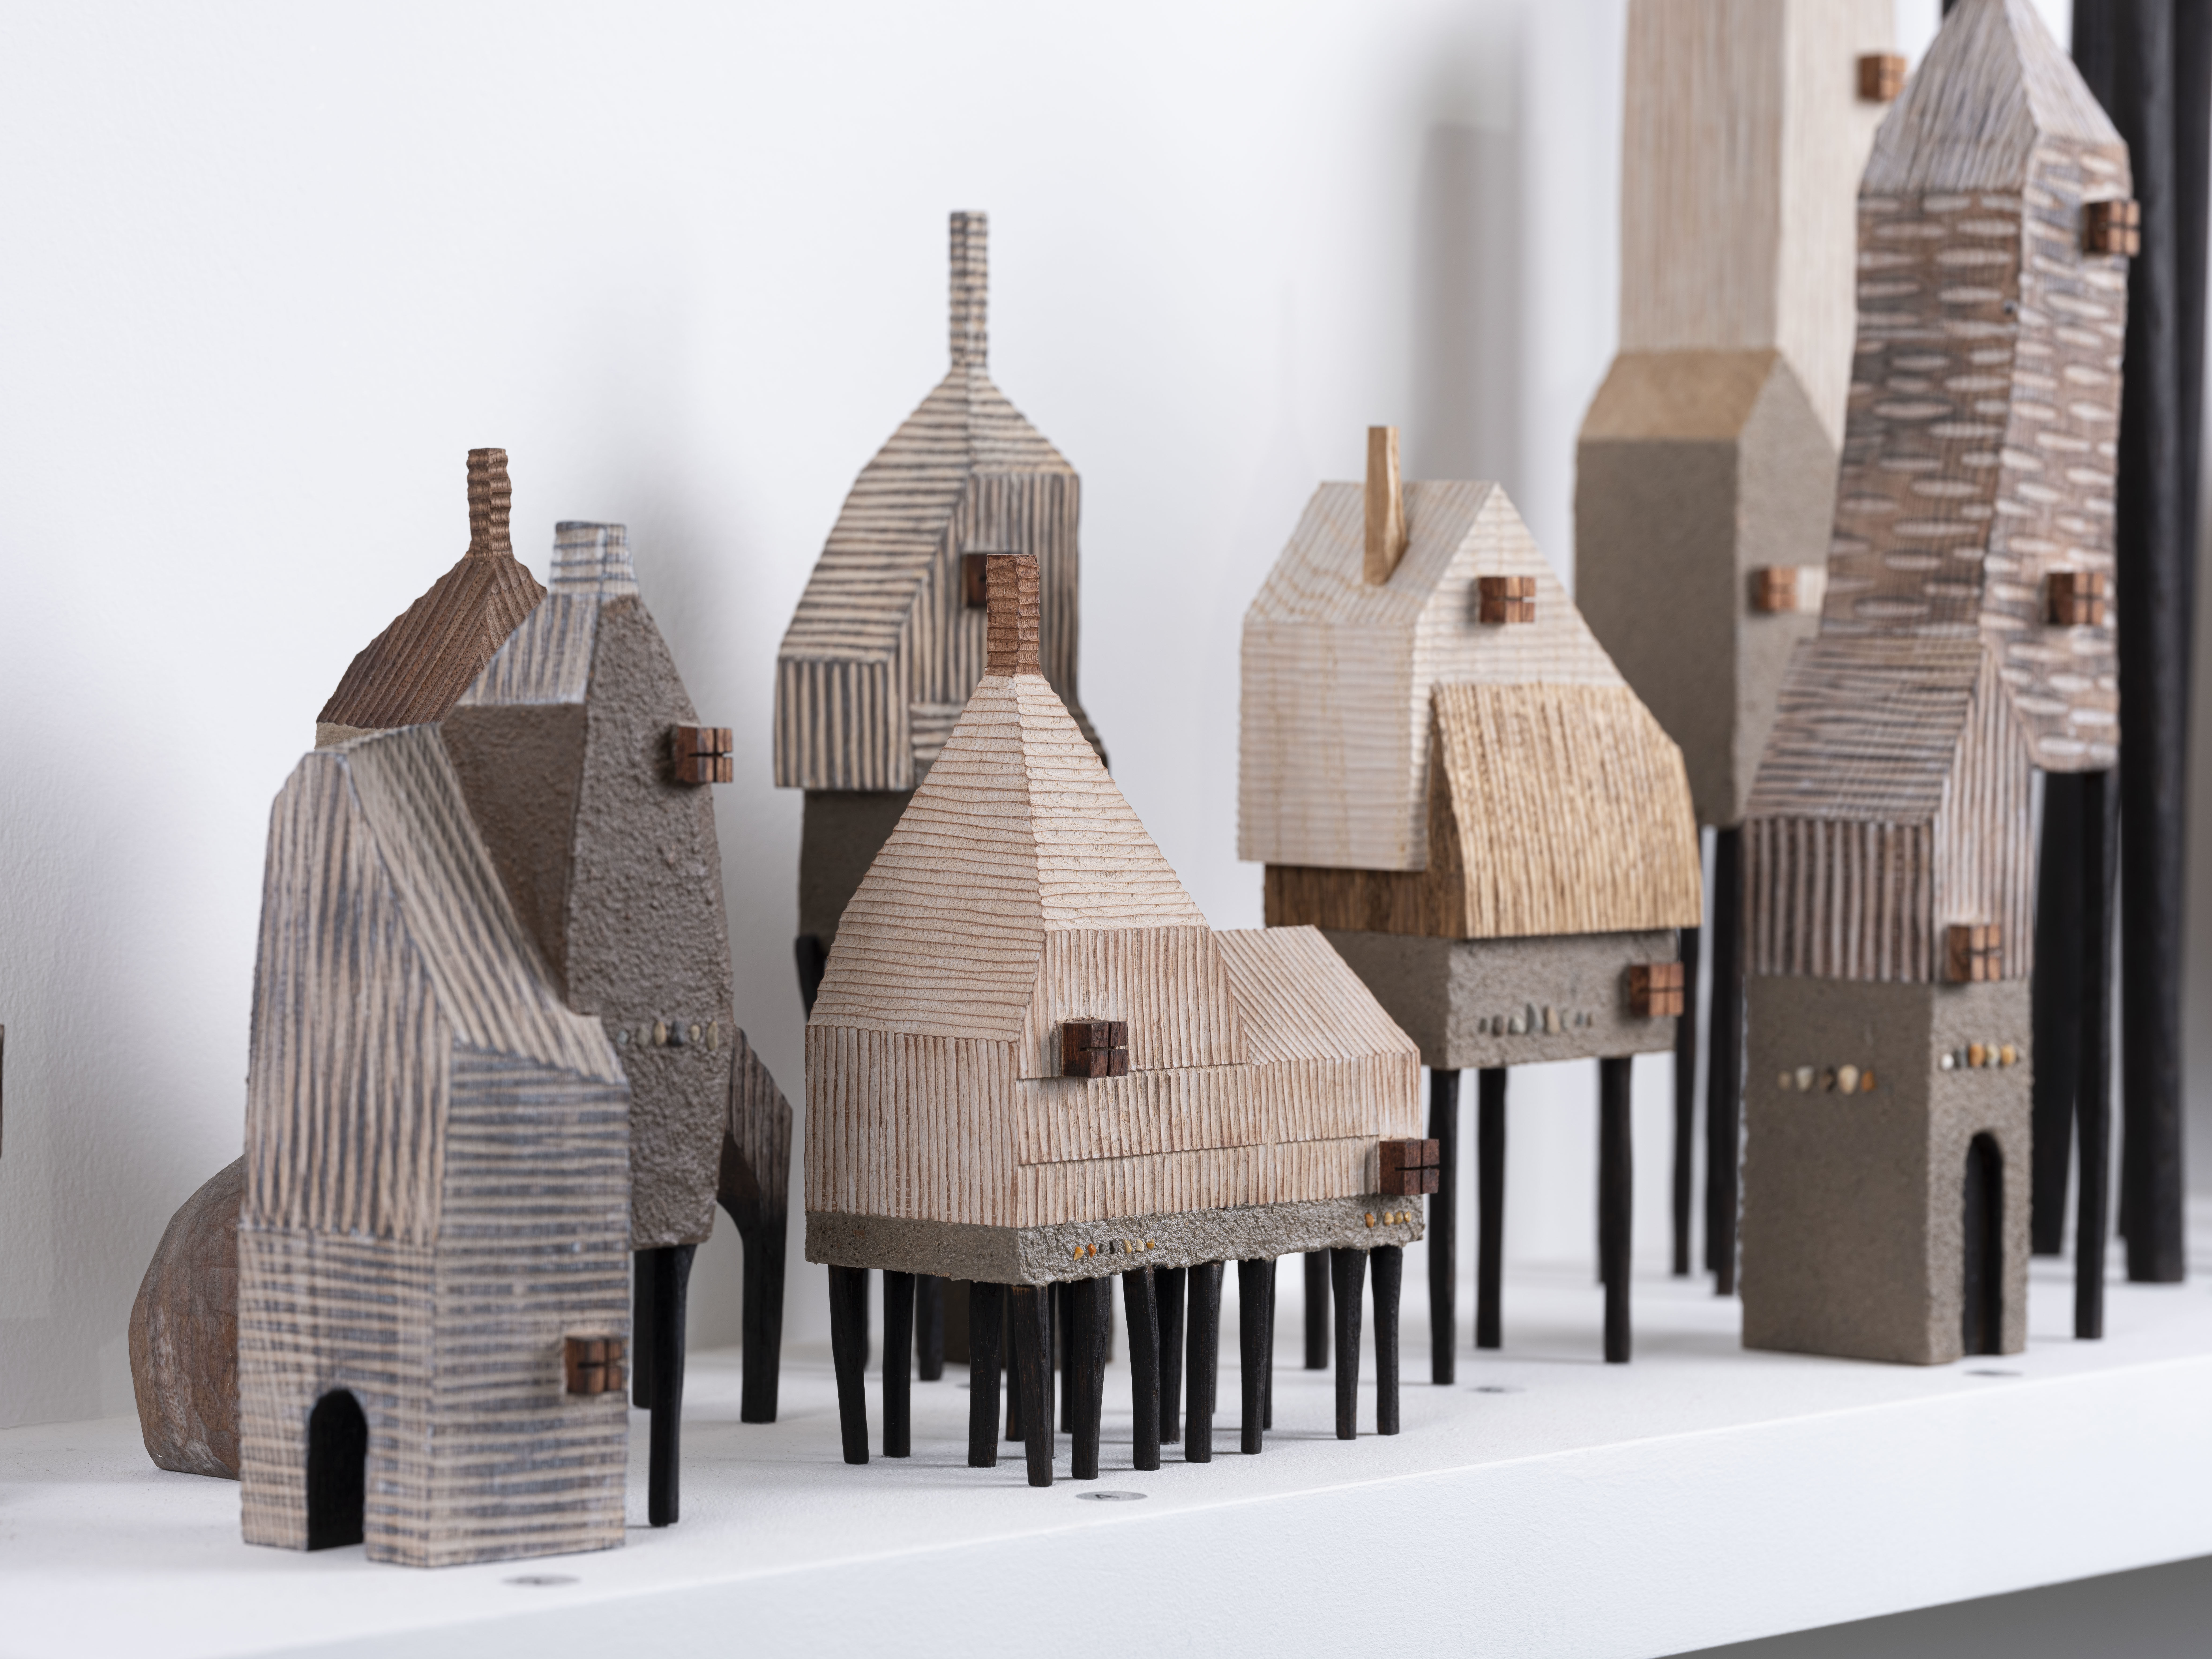 Multiple miniature handcrafted houses on a shelf.